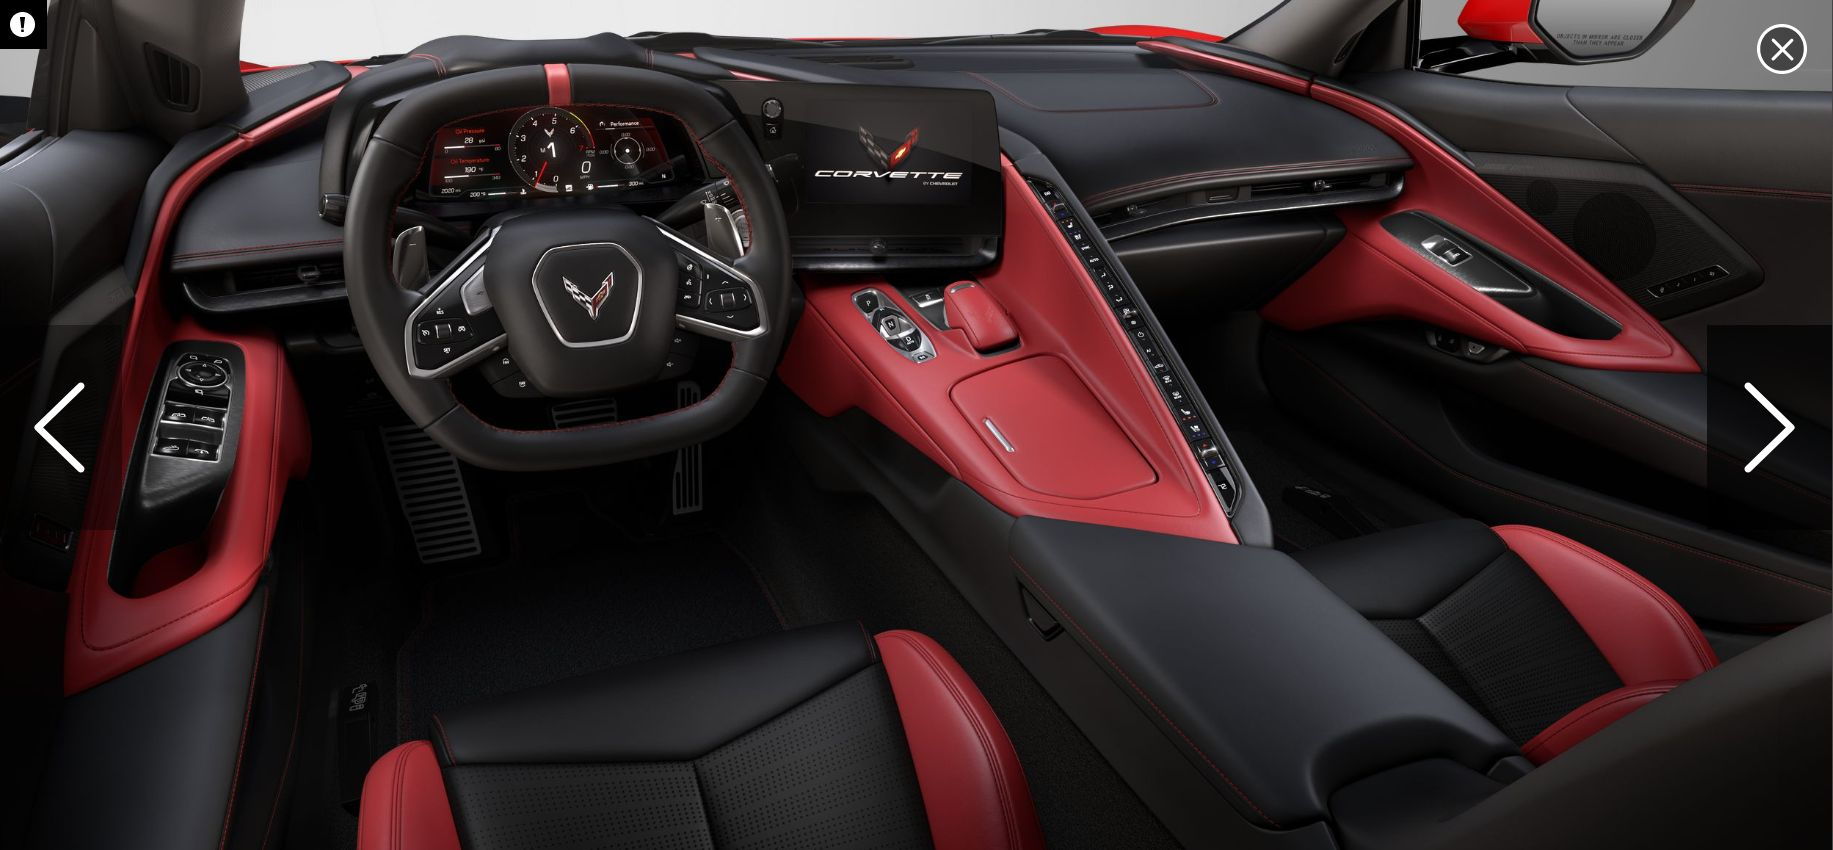 Stealth Interior Trim Package Debuts On 2023 Corvette CorvetteForum